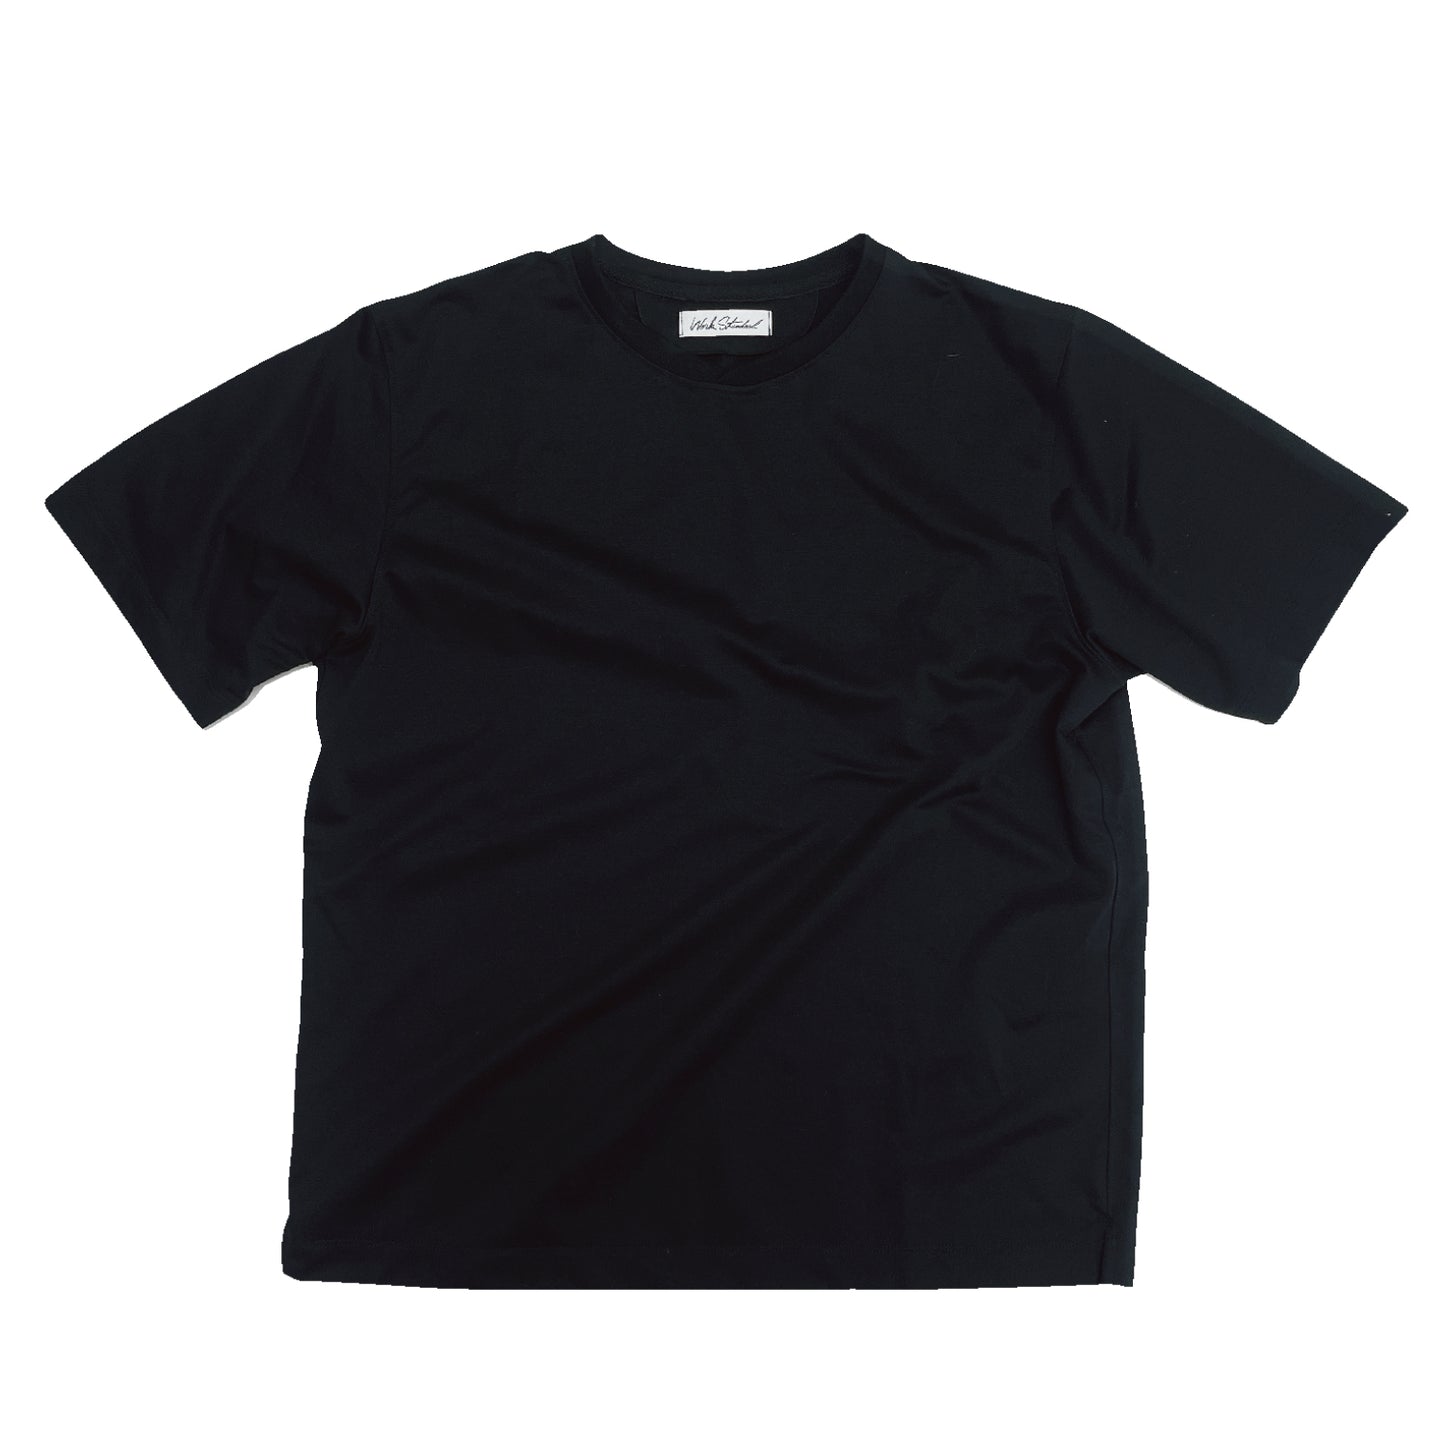 NEW DRESS T SHIRT S/S BLACK